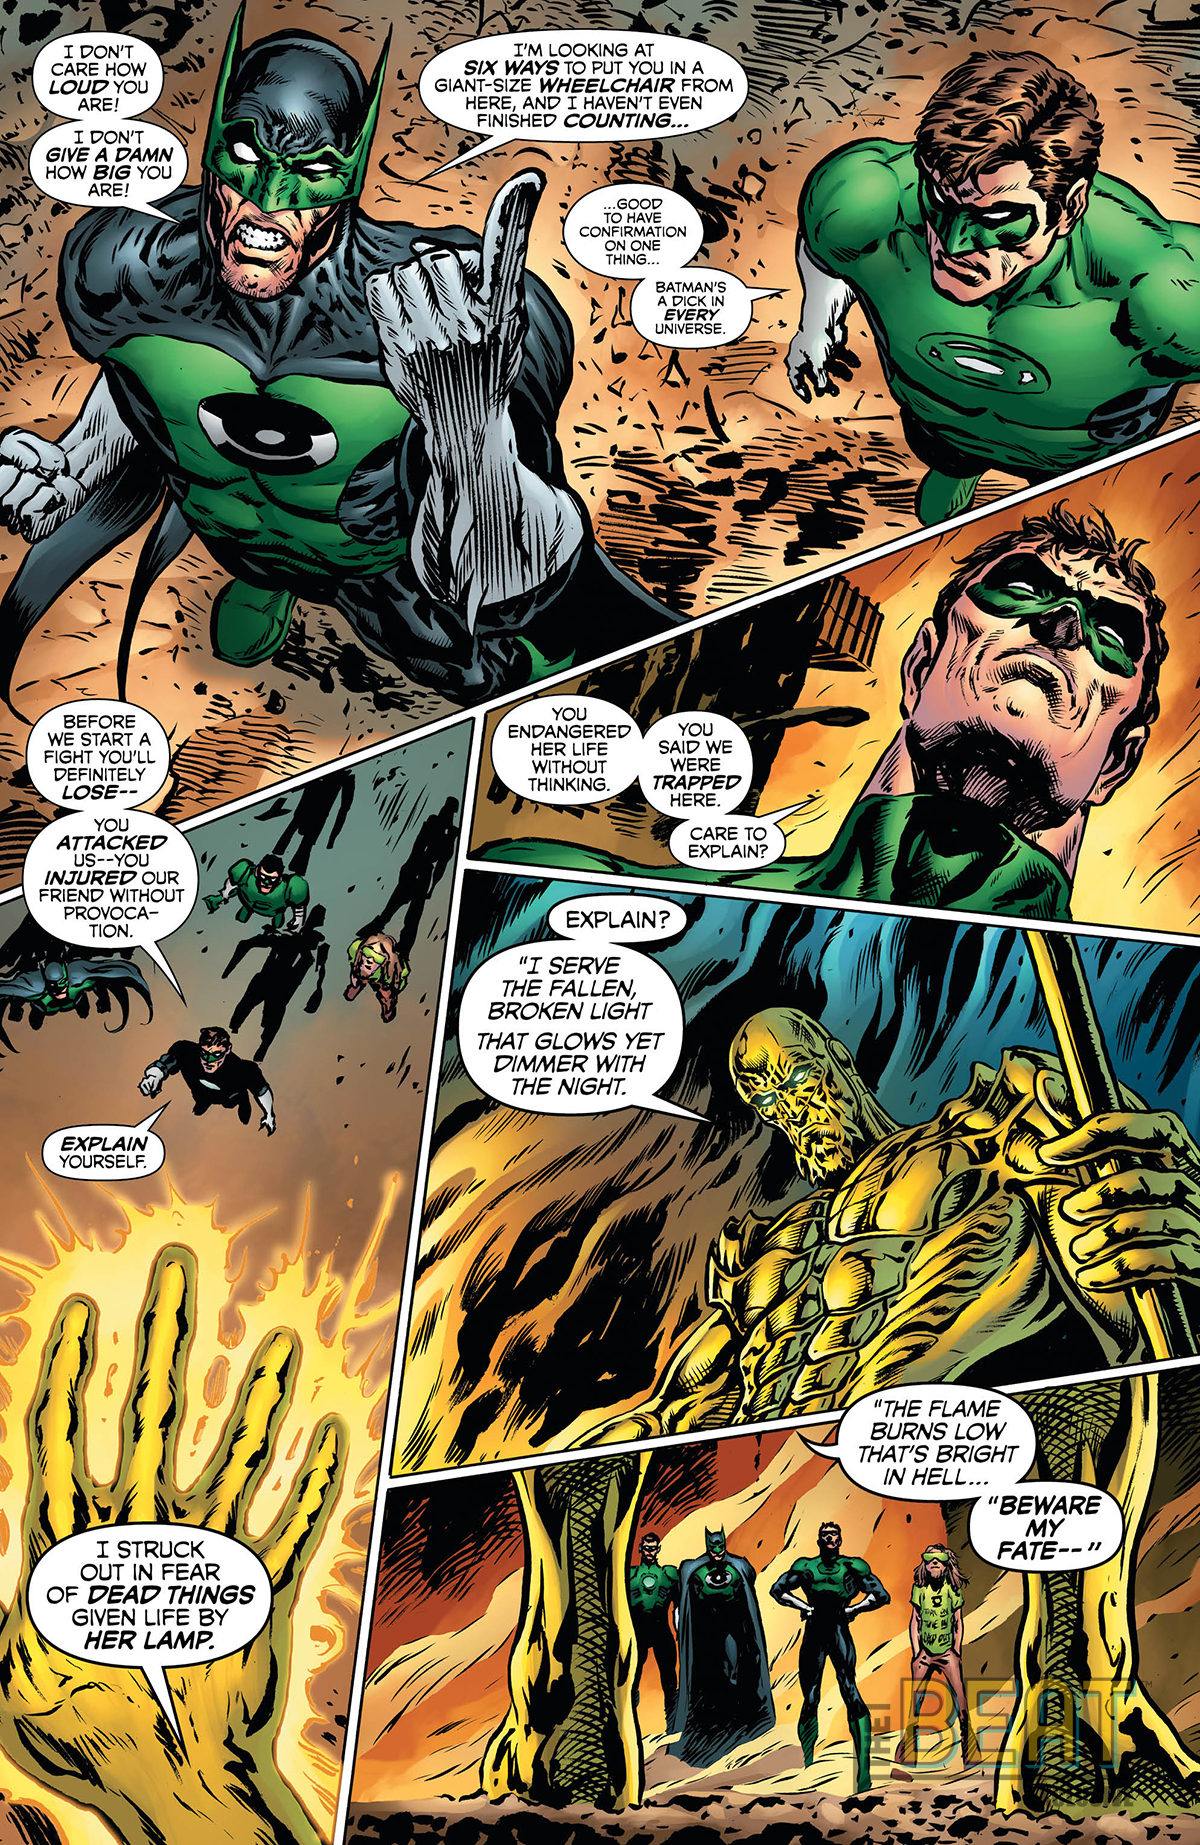 The Green Lantern #11 preview